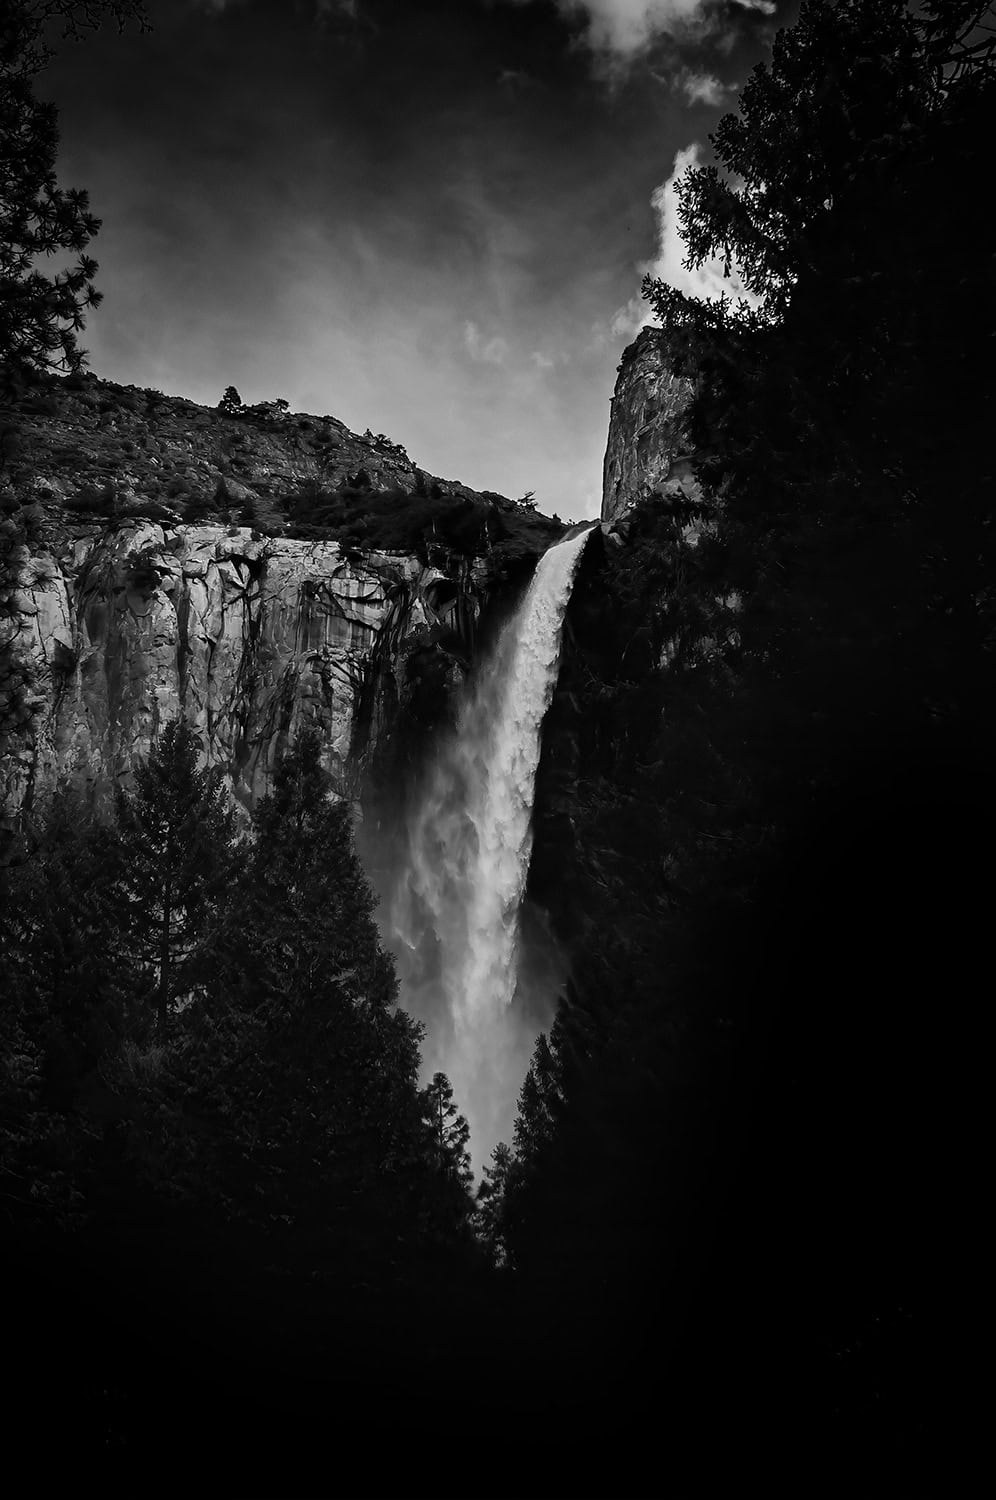 Bridalveil Fall in Yosemite National Park